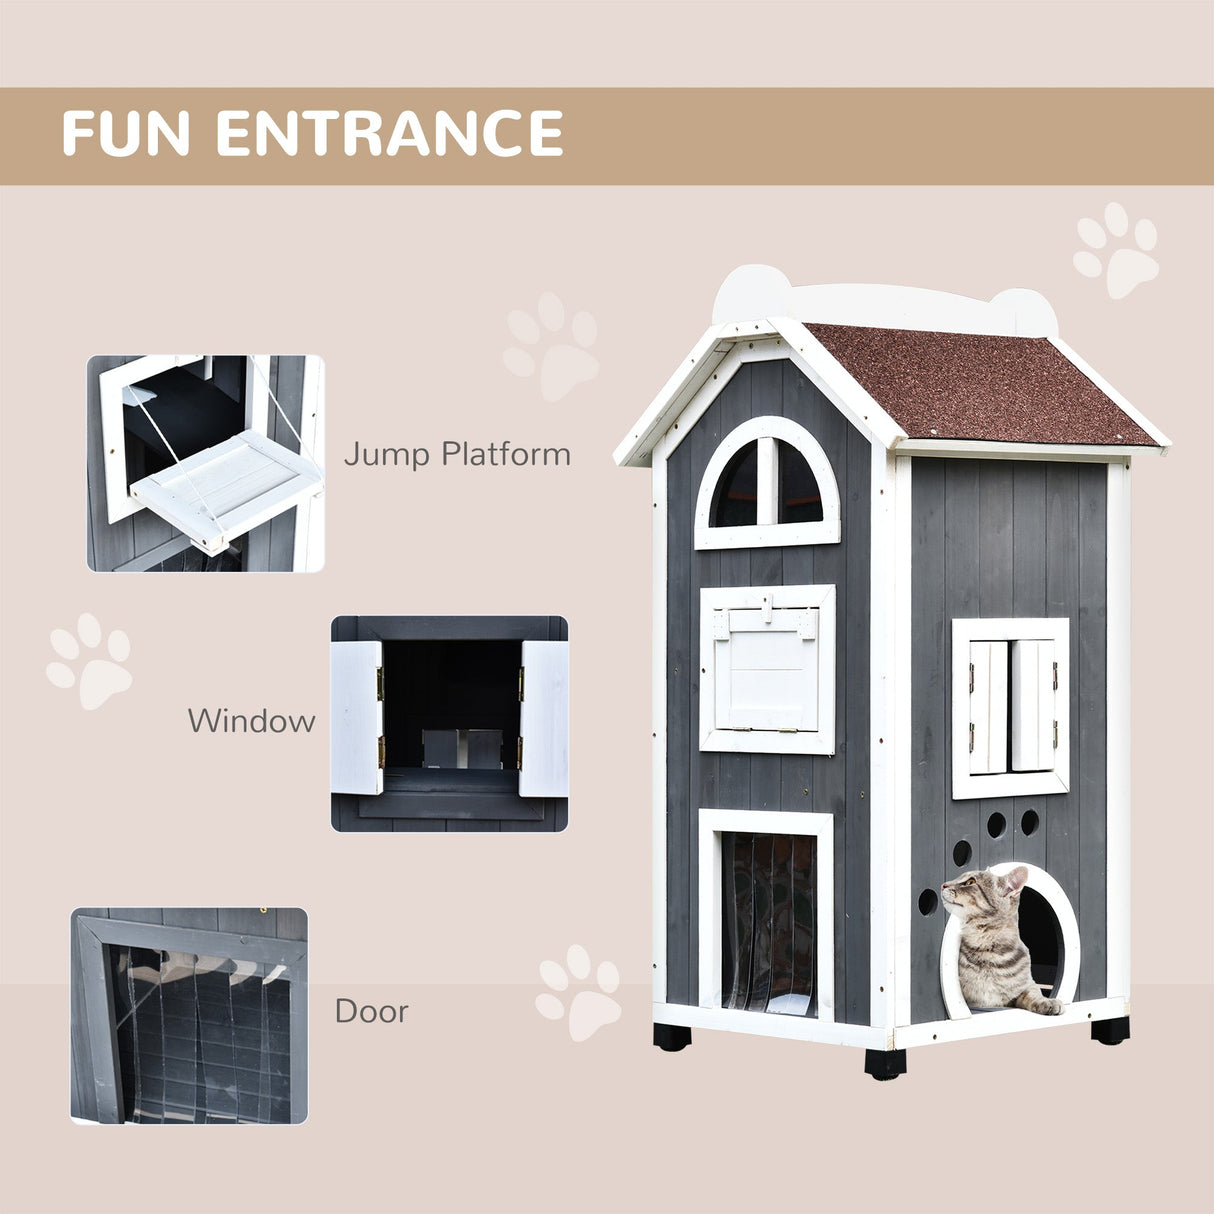 2-Floor Outdoor Cat House: Solid Wood, Wheels, 59x55x109cm, PawHut,